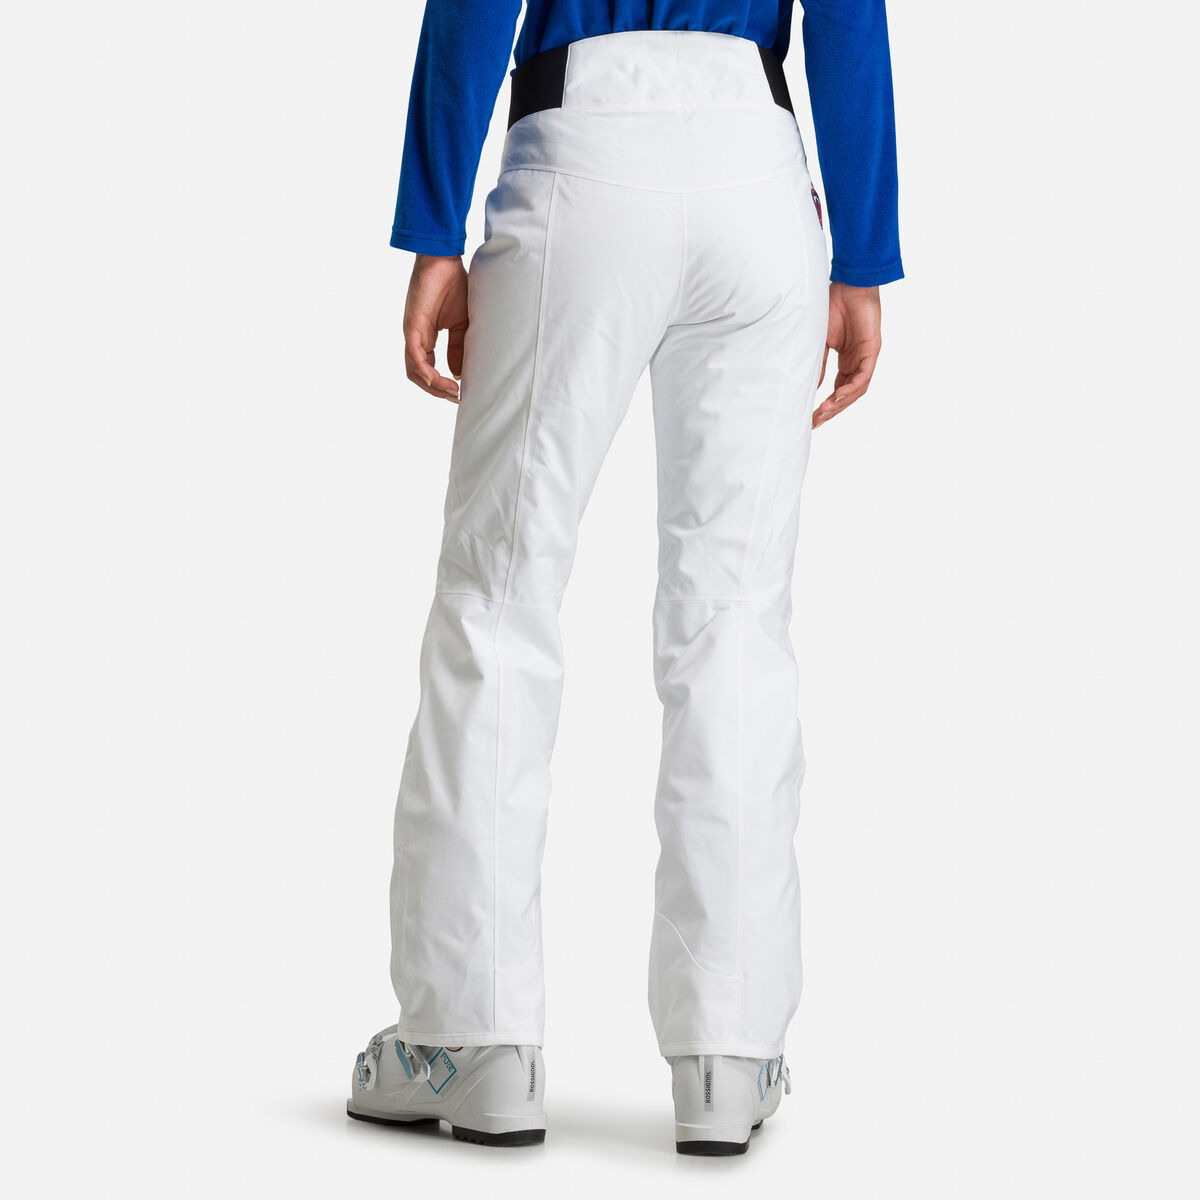 Rossignol Women's Classique Ski Pants, Pants Women, White